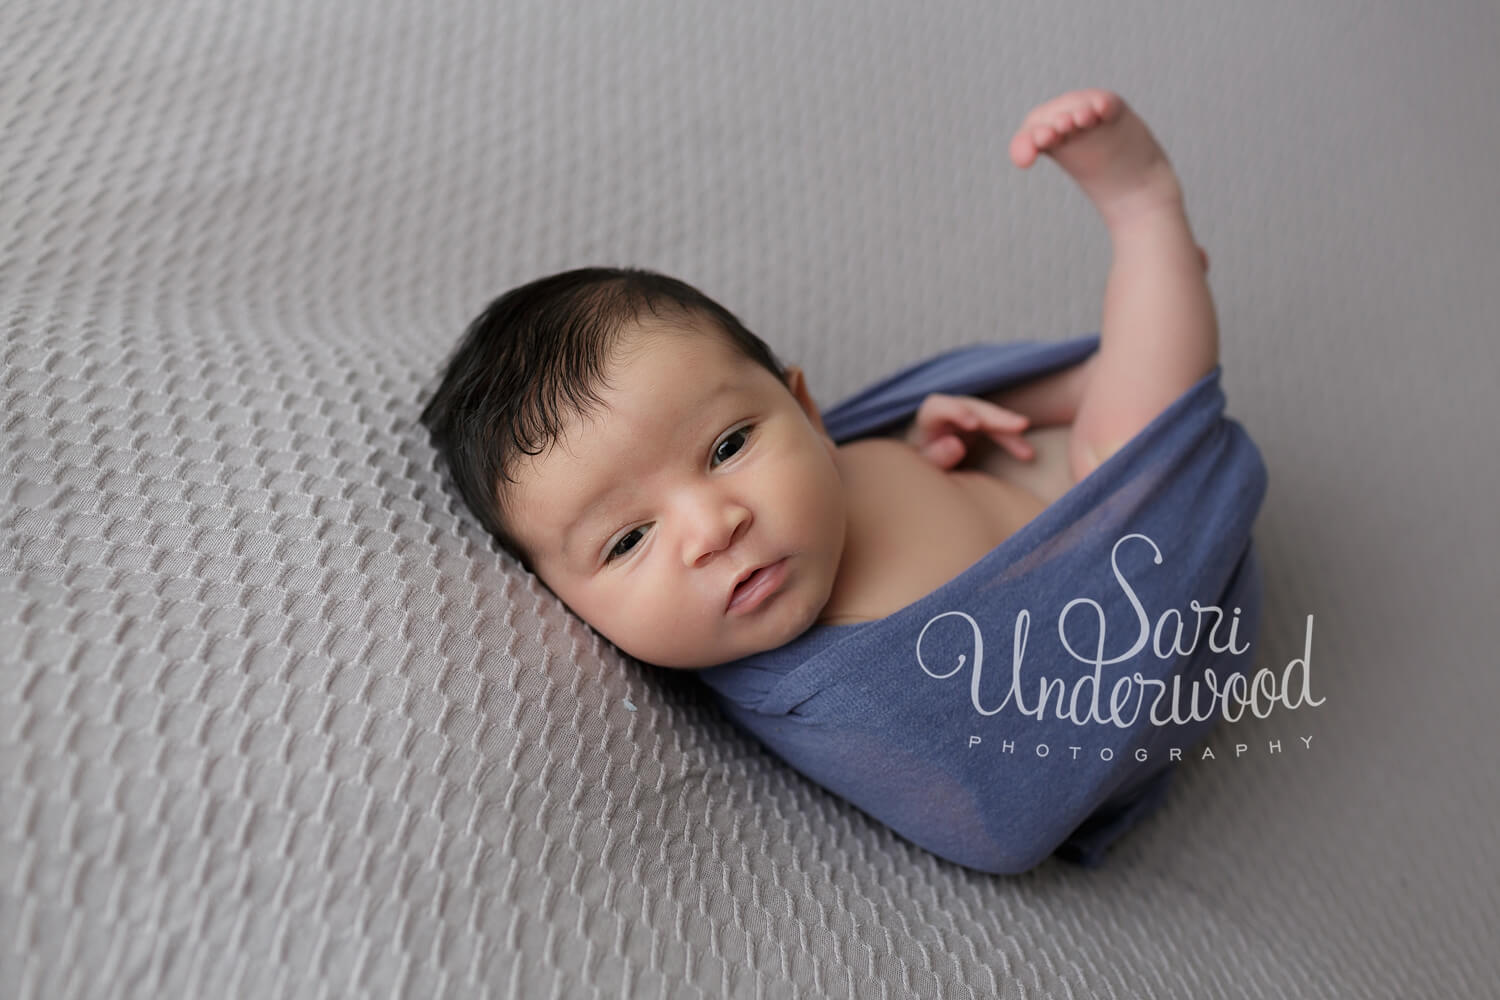 Posed newborn photography Orlando | Ameer 20 days old